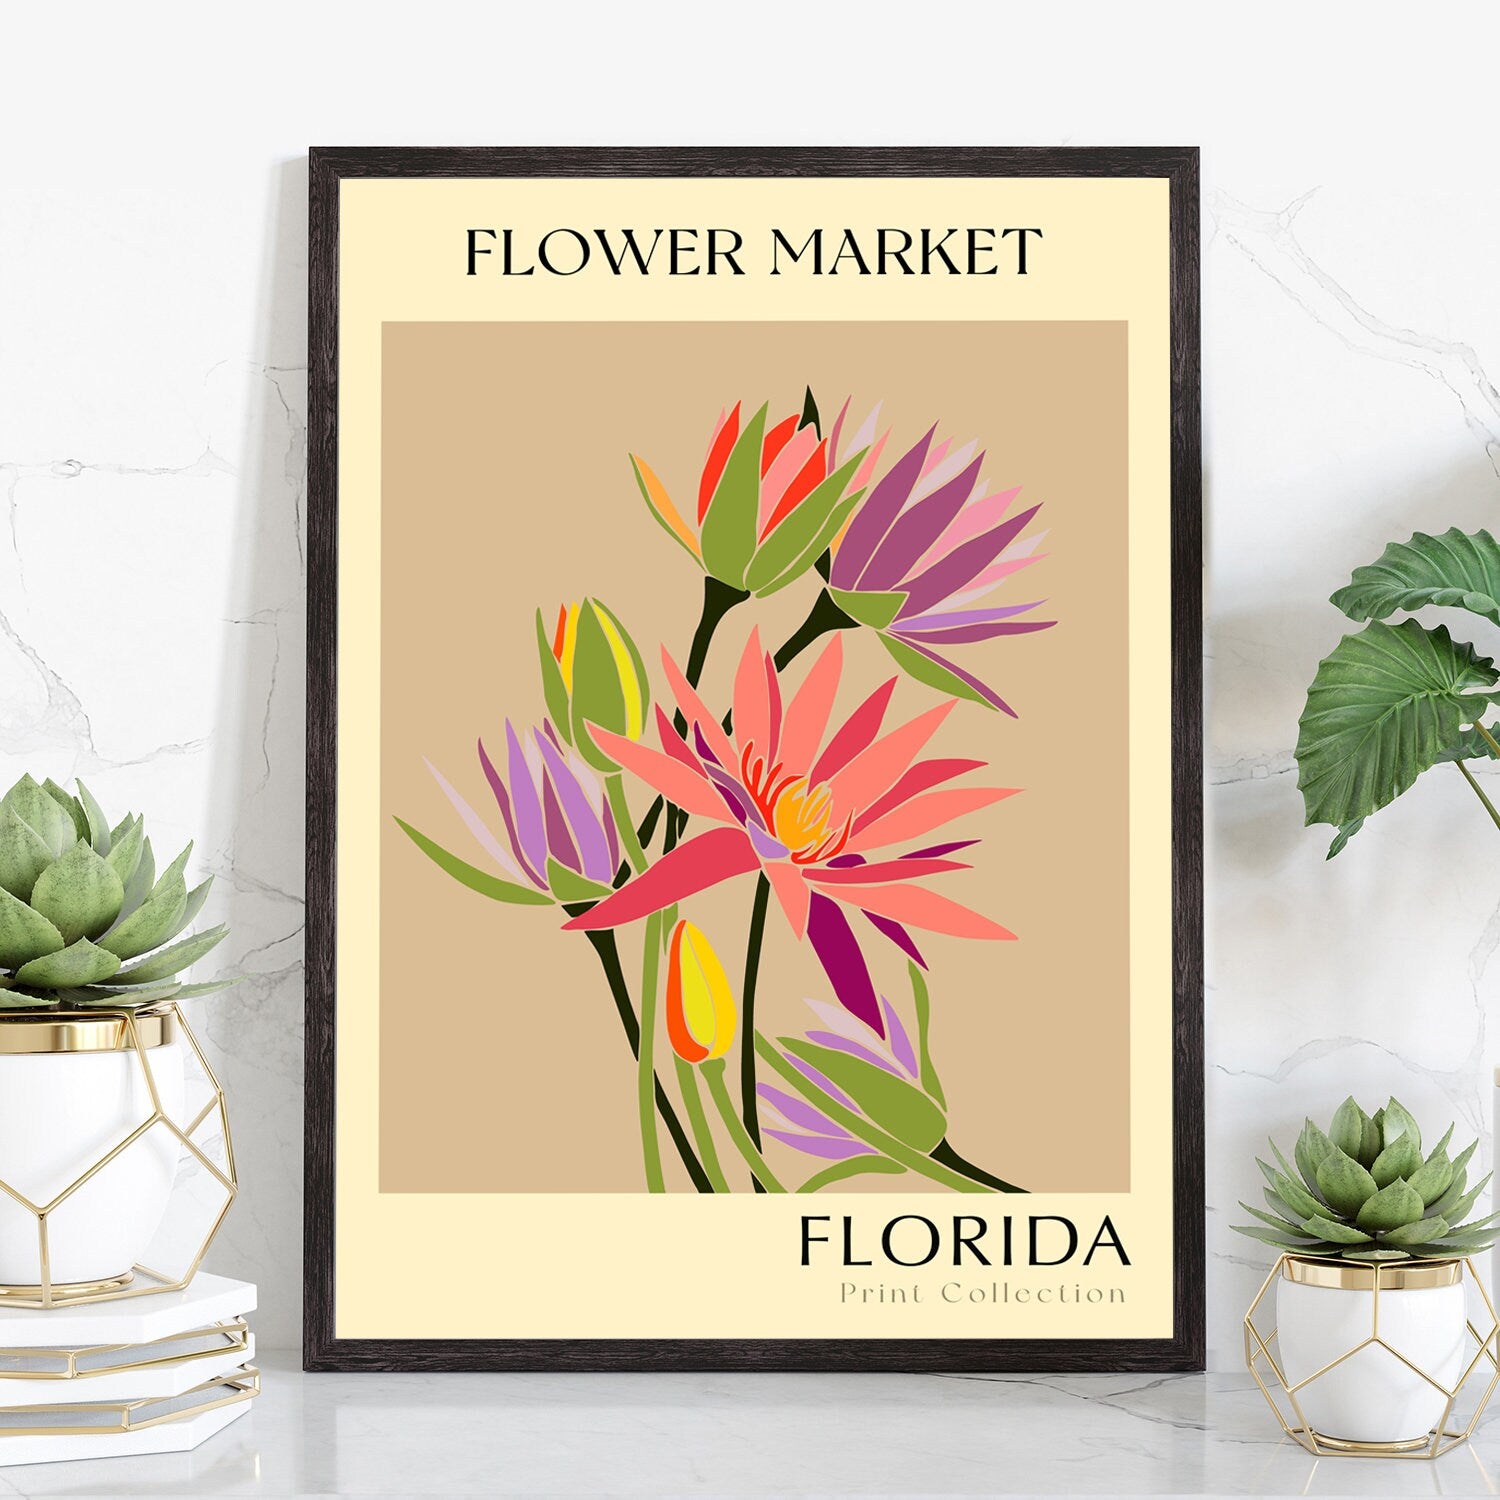 Florida State flower print, USA states poster, Florida flower market poster, Botanical posters, Nature poster artwork, Boho floral wall art